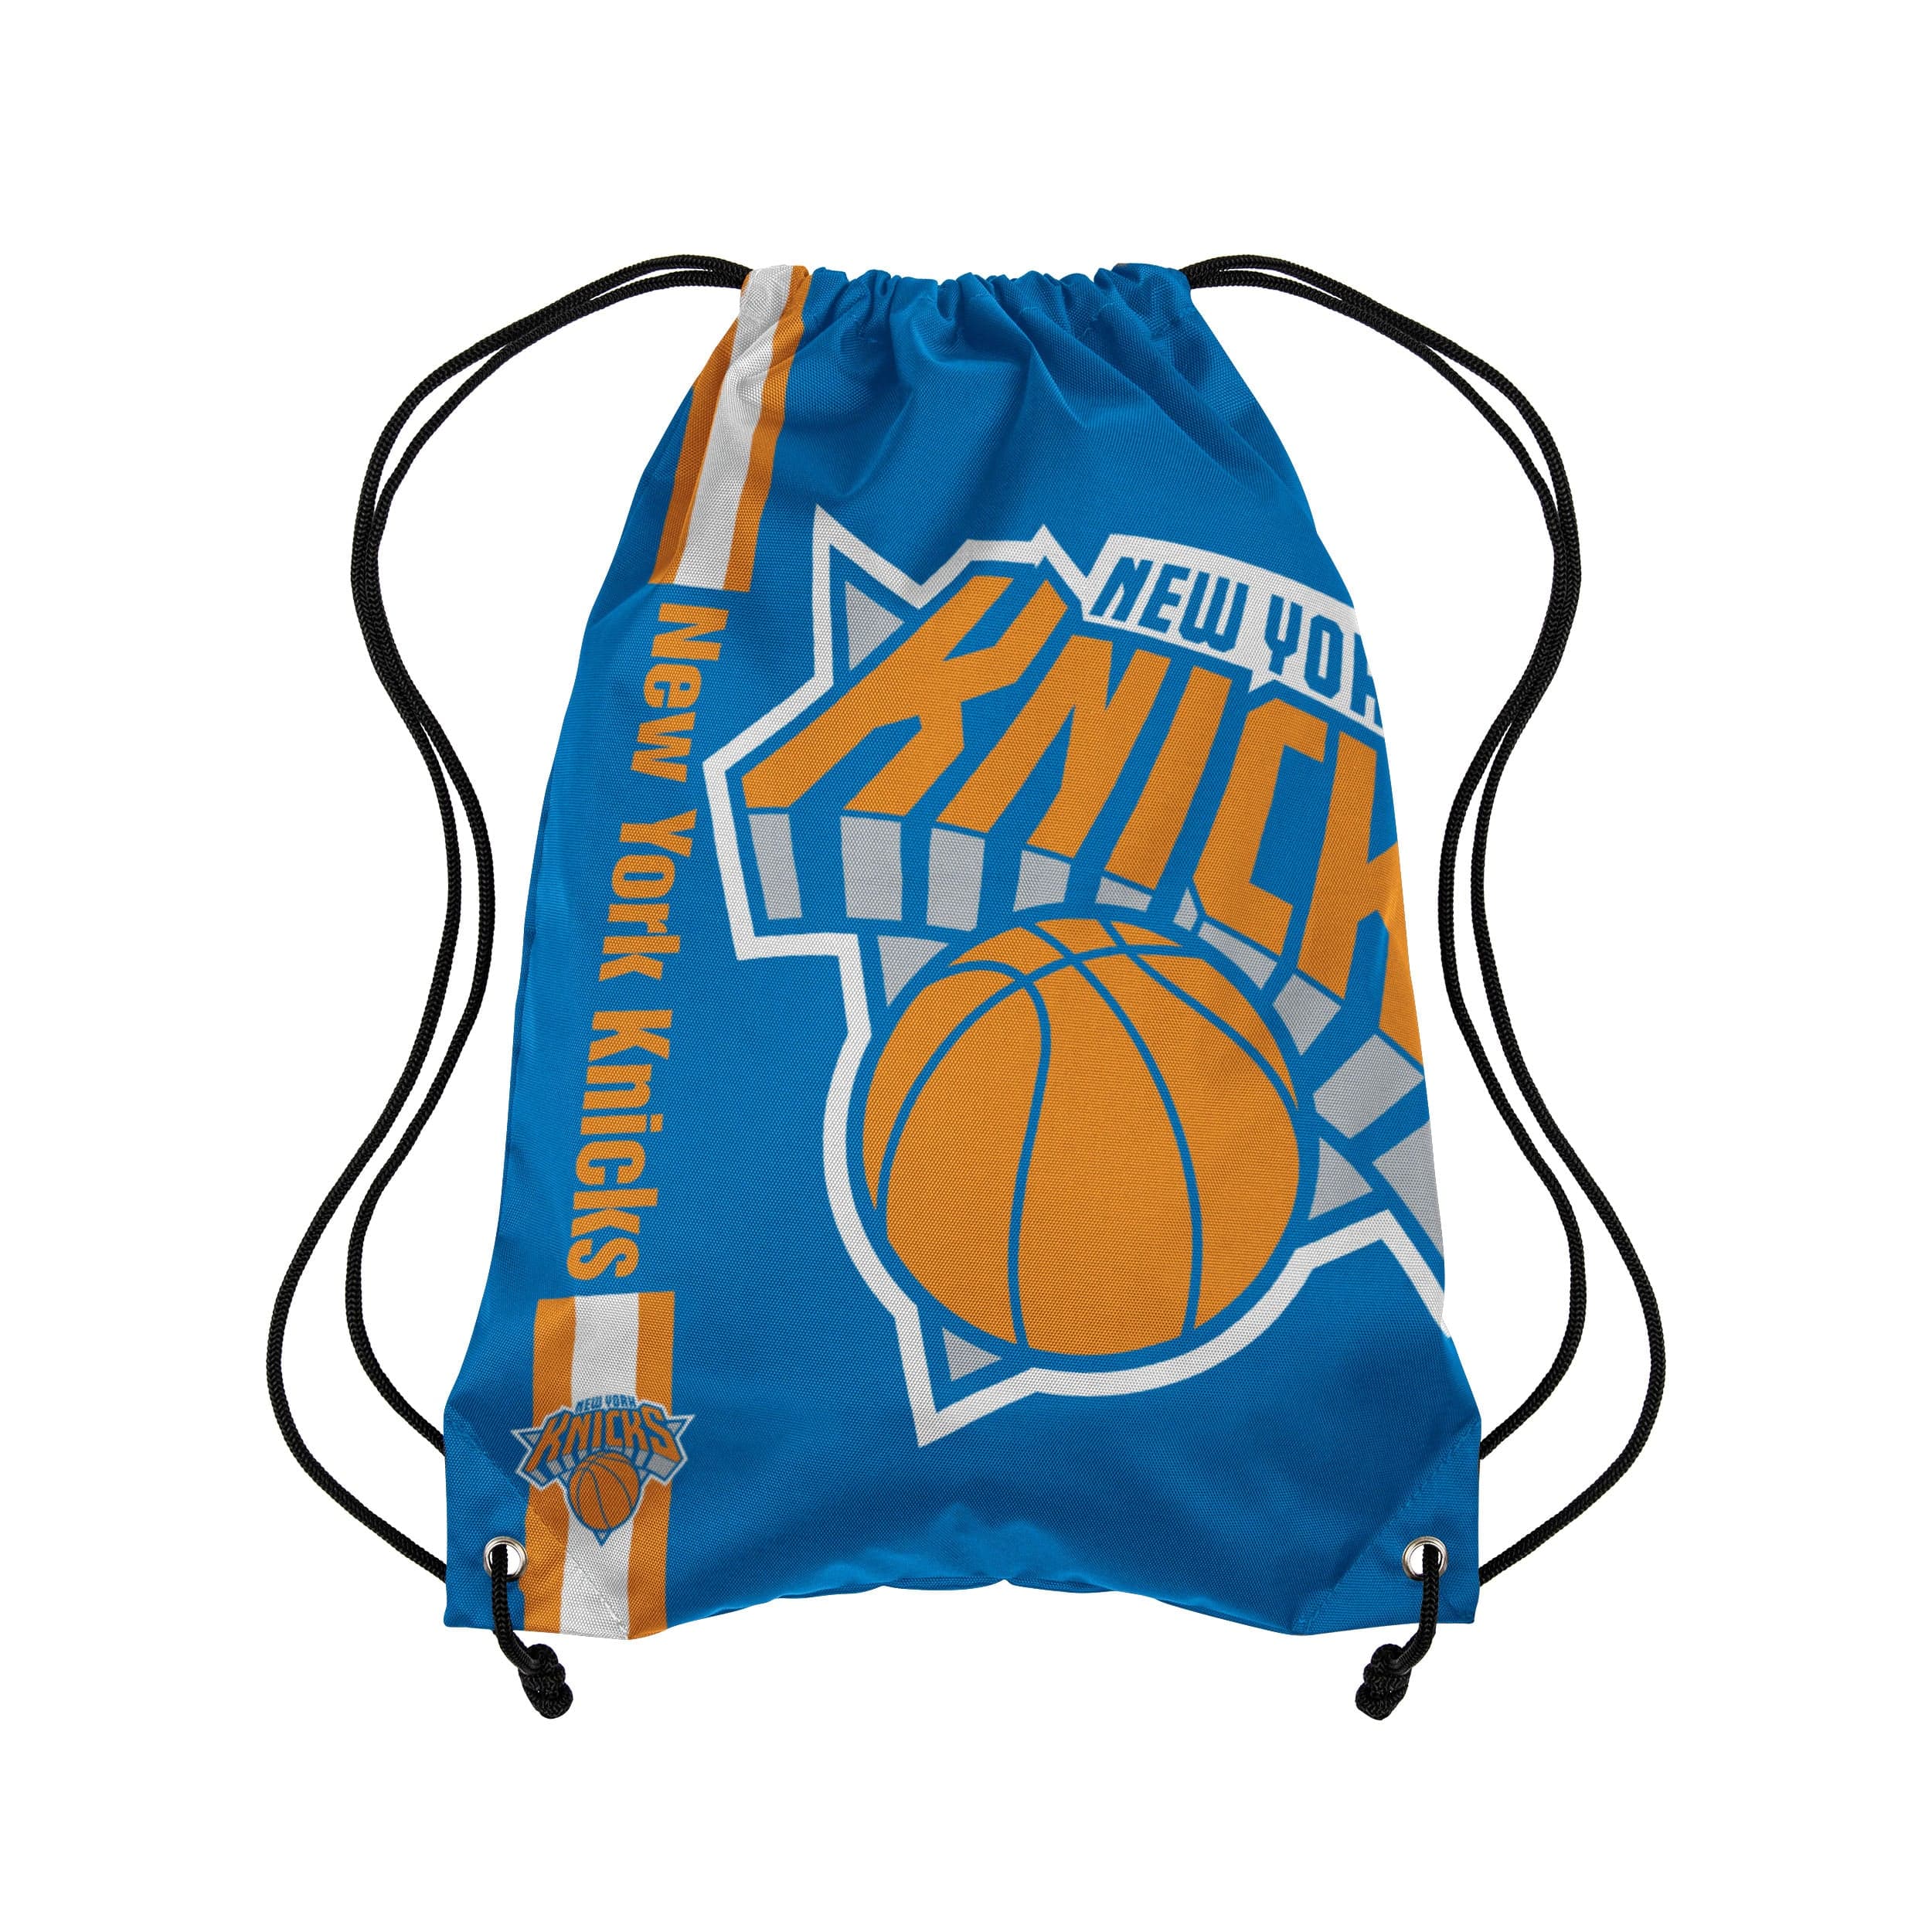 Official NBA Bags, NBA Backpacks, Basketball Luggage, Purses